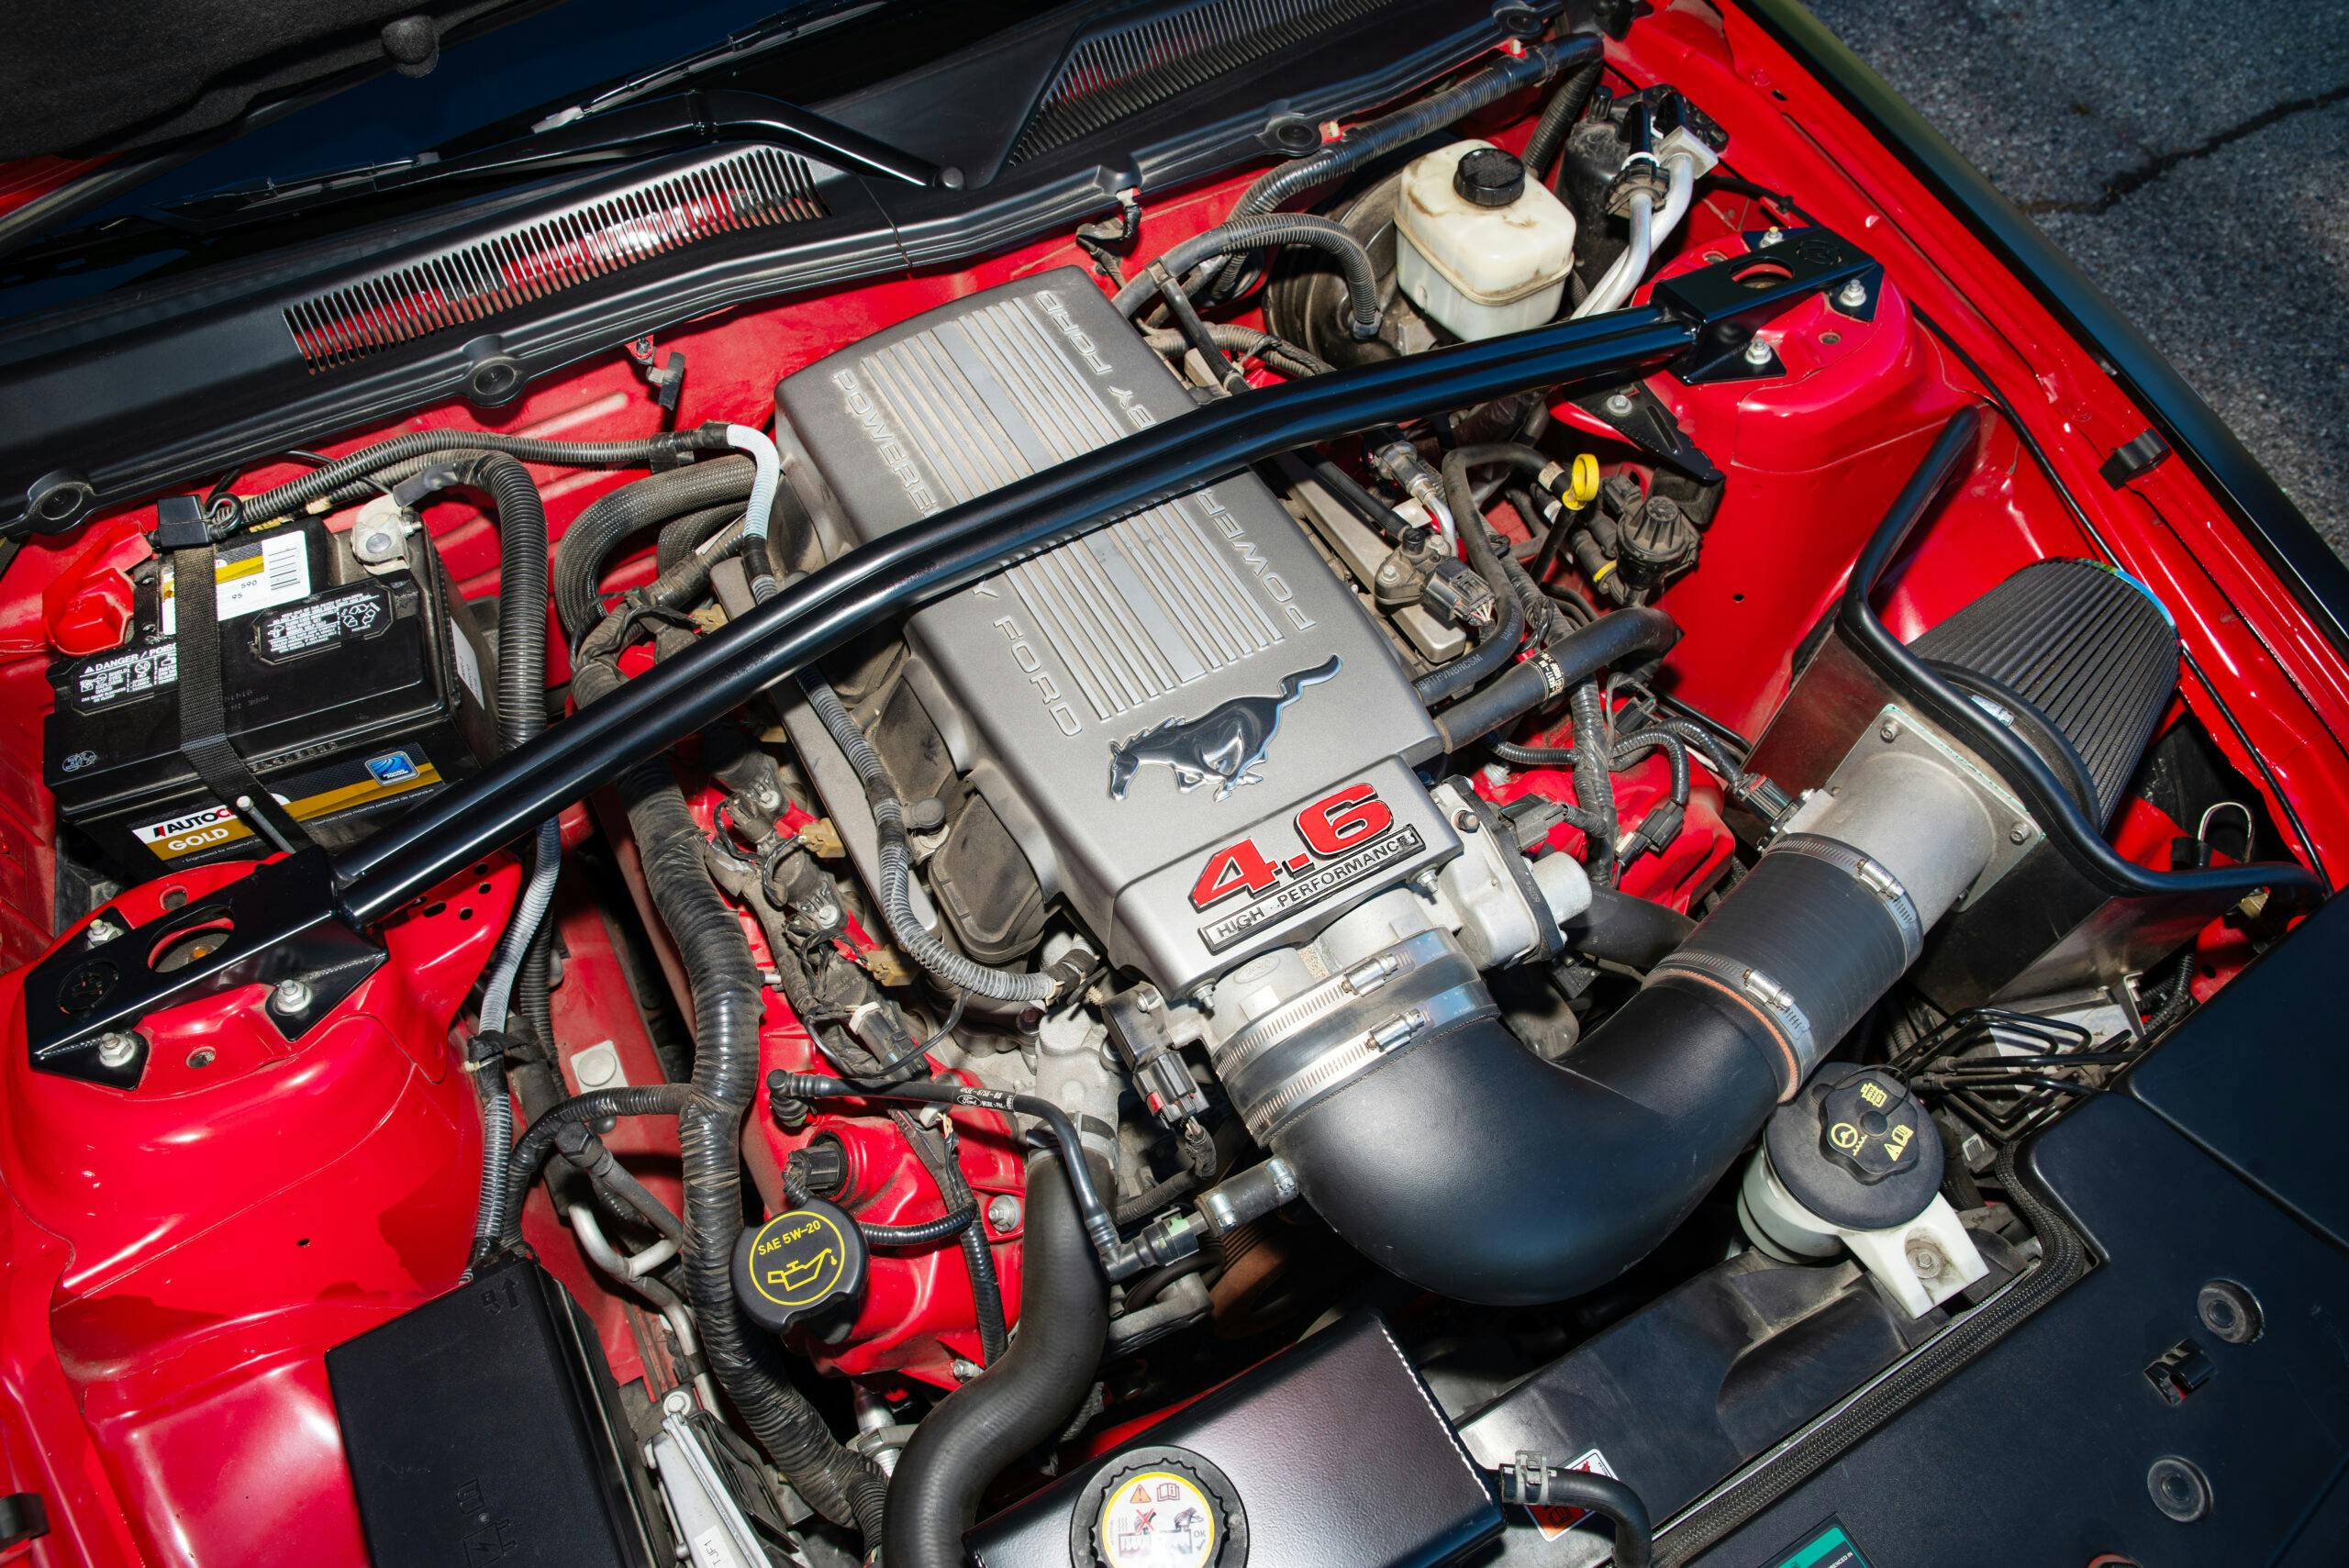 2006 Mustang GT custom livery engine bay